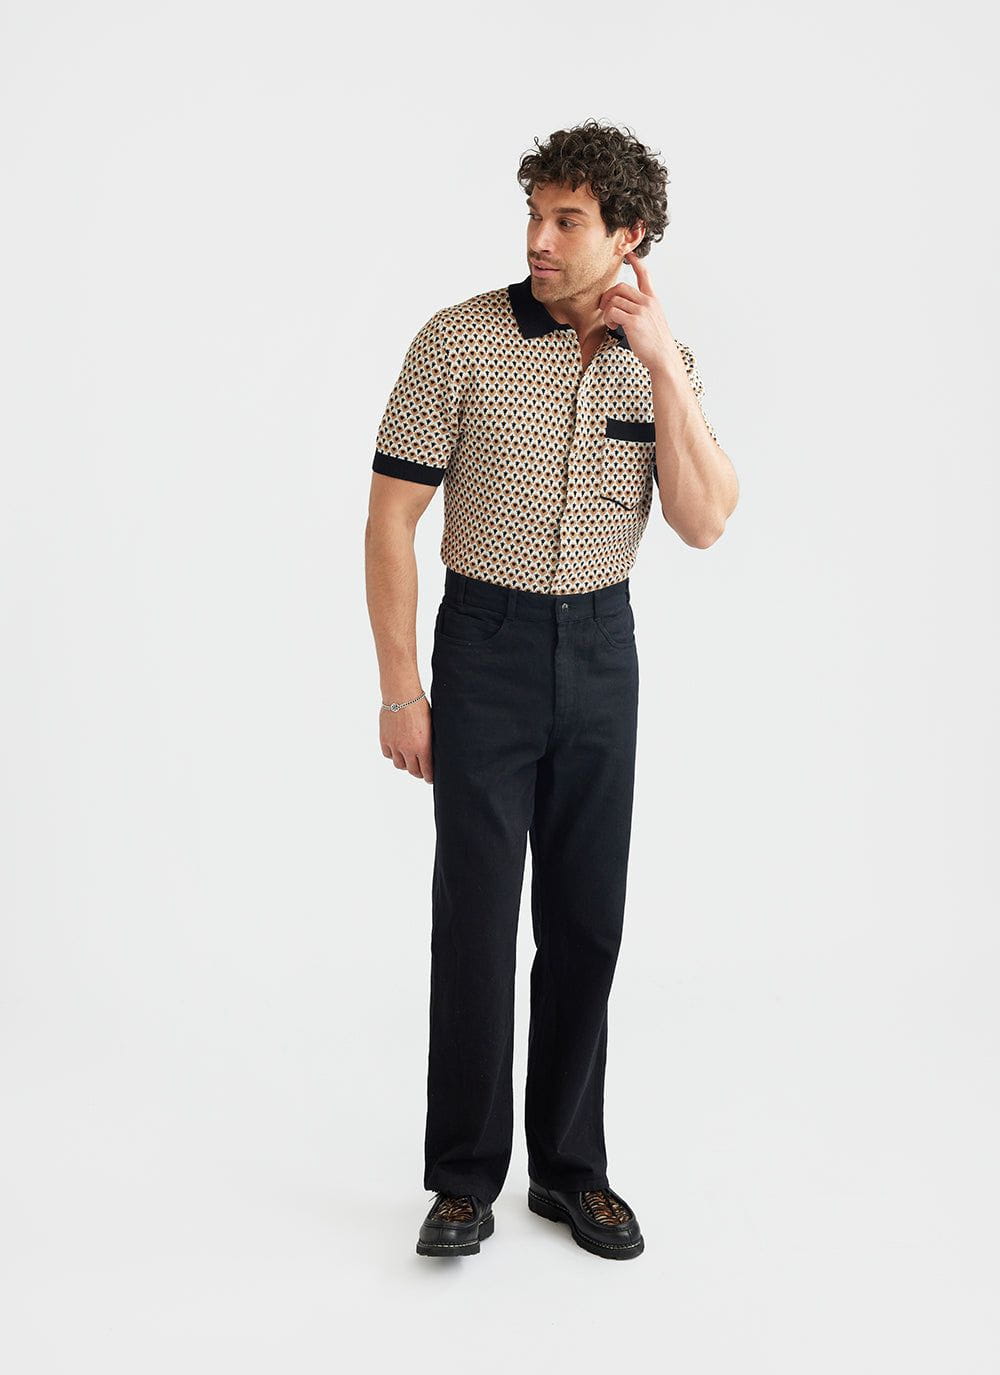 Men's Knitted Polo Shirt | Rust Jacquard & Percival Menswear